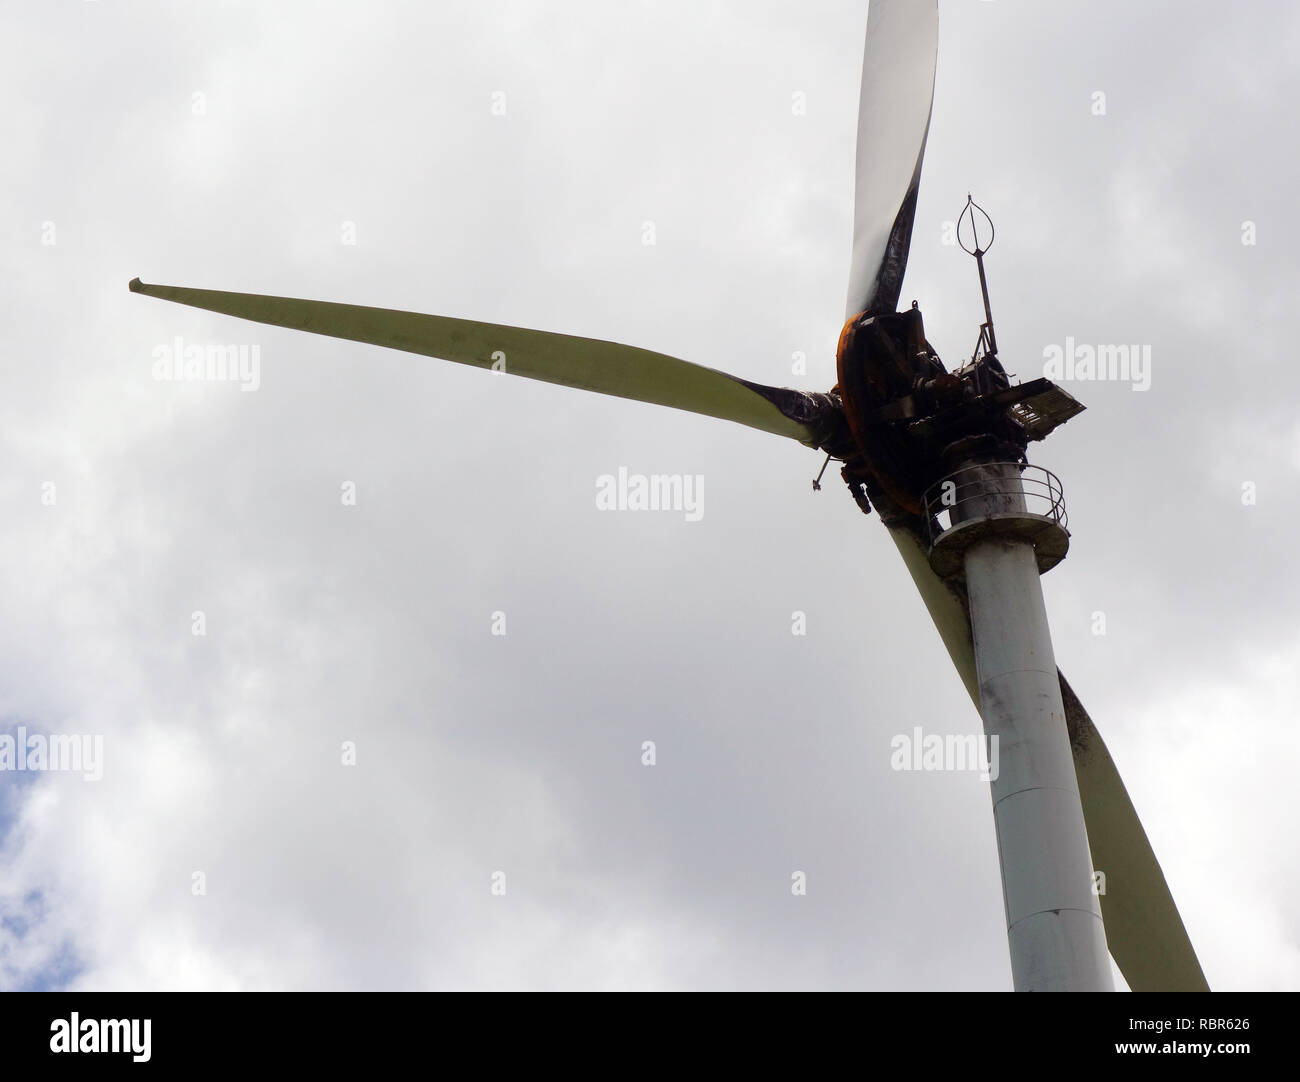 Wind turbine in which nacelle has caught fire, Windy Hill wind farm, near Ravenshoe, Queensland, Australia. No PR Stock Photo